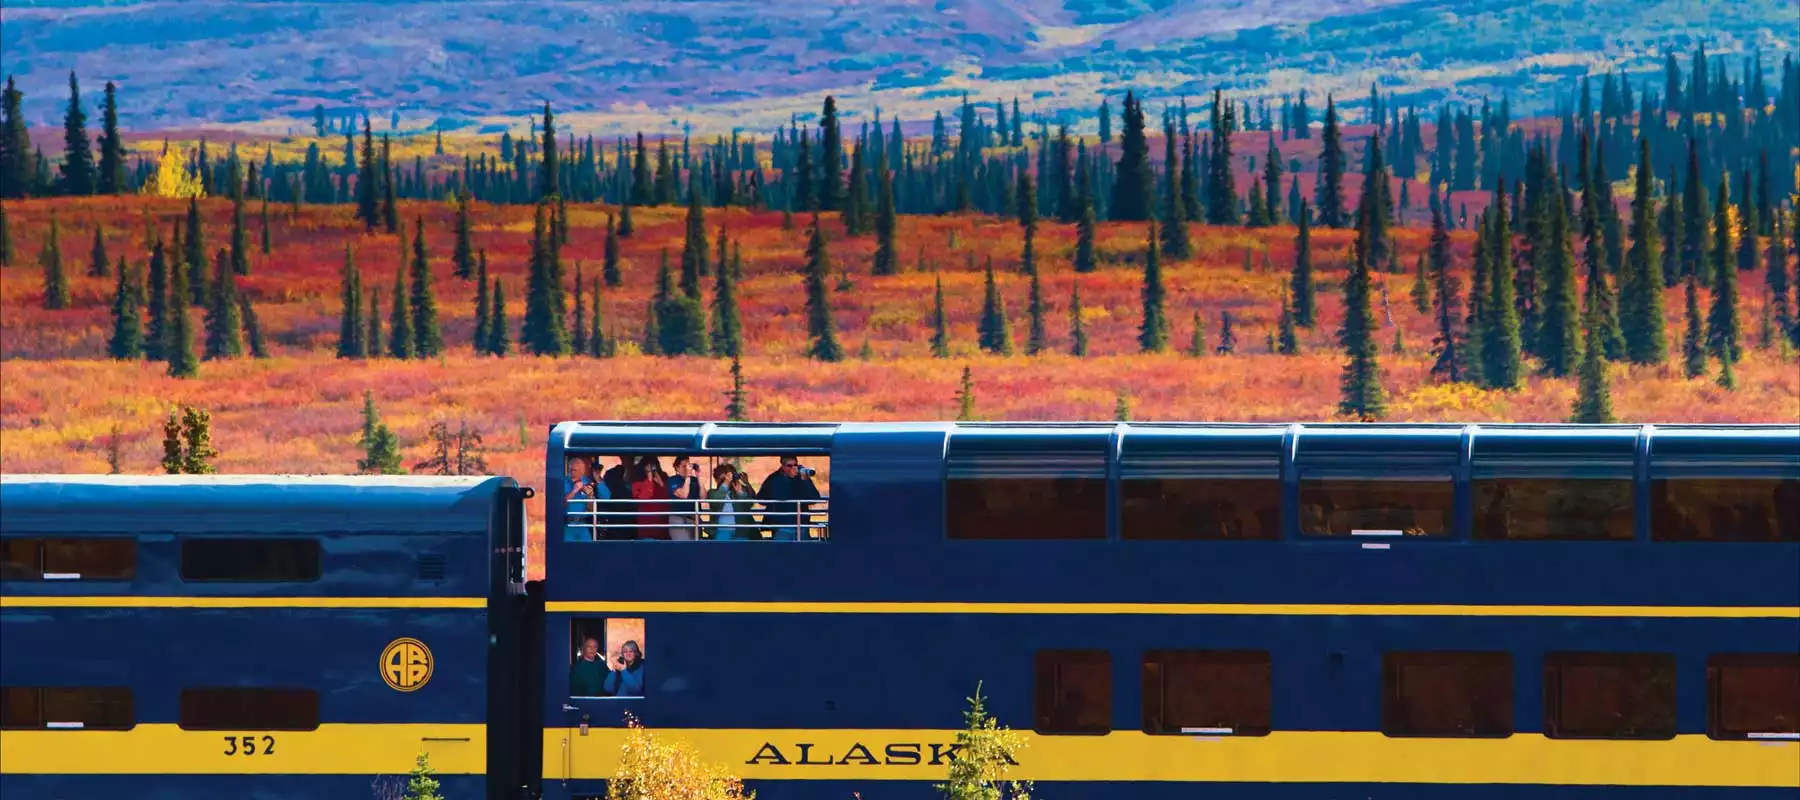 Alaska Train Trips & Luxury Alaska Tours & Vacations